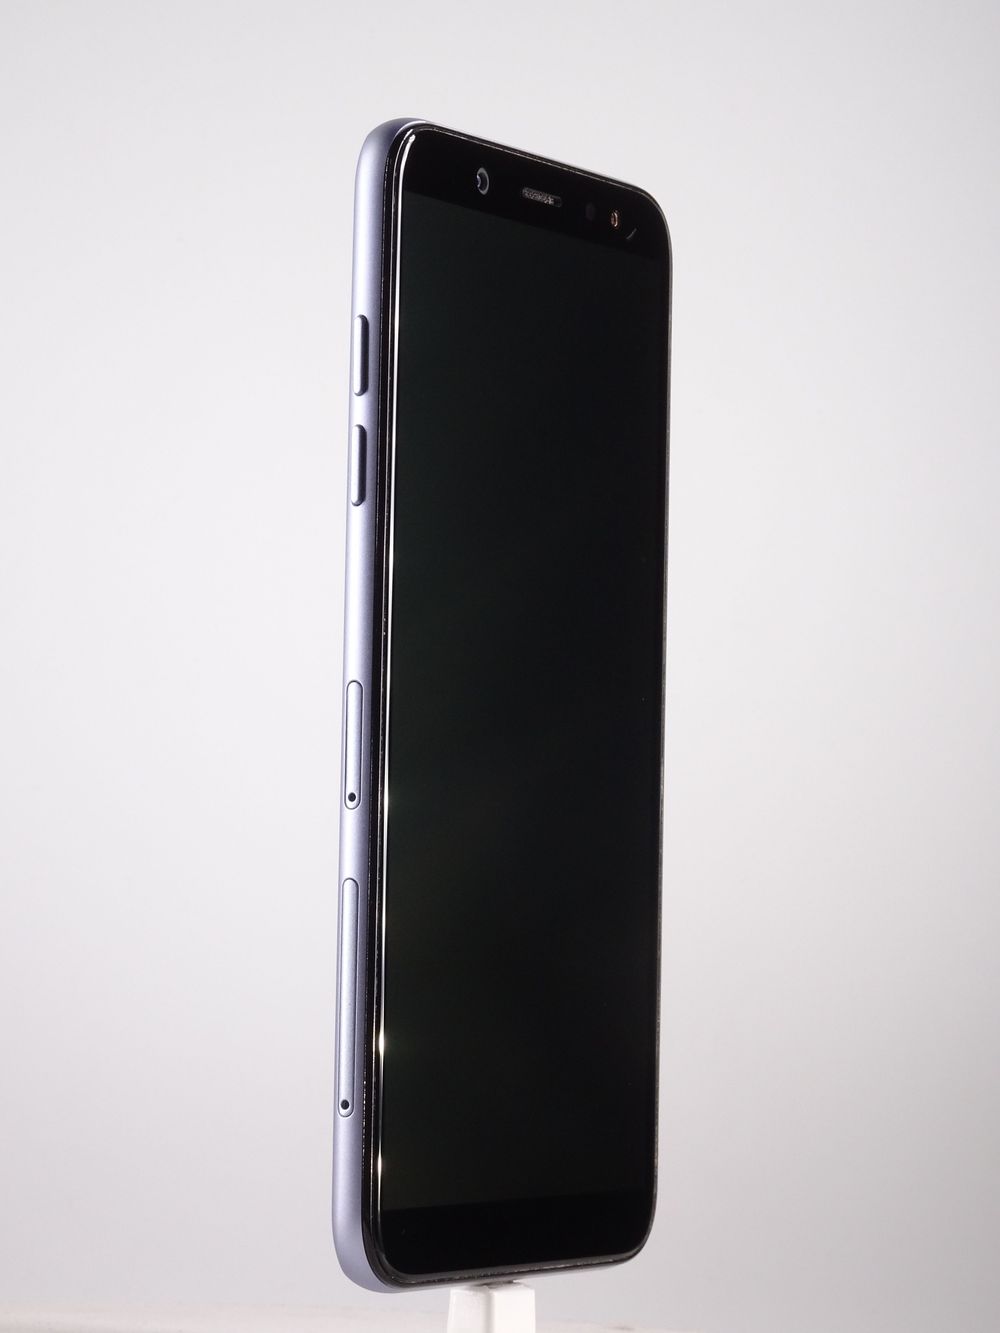 Мобилен телефон Samsung Galaxy A6 (2018), Lavender, 32 GB, Excelent